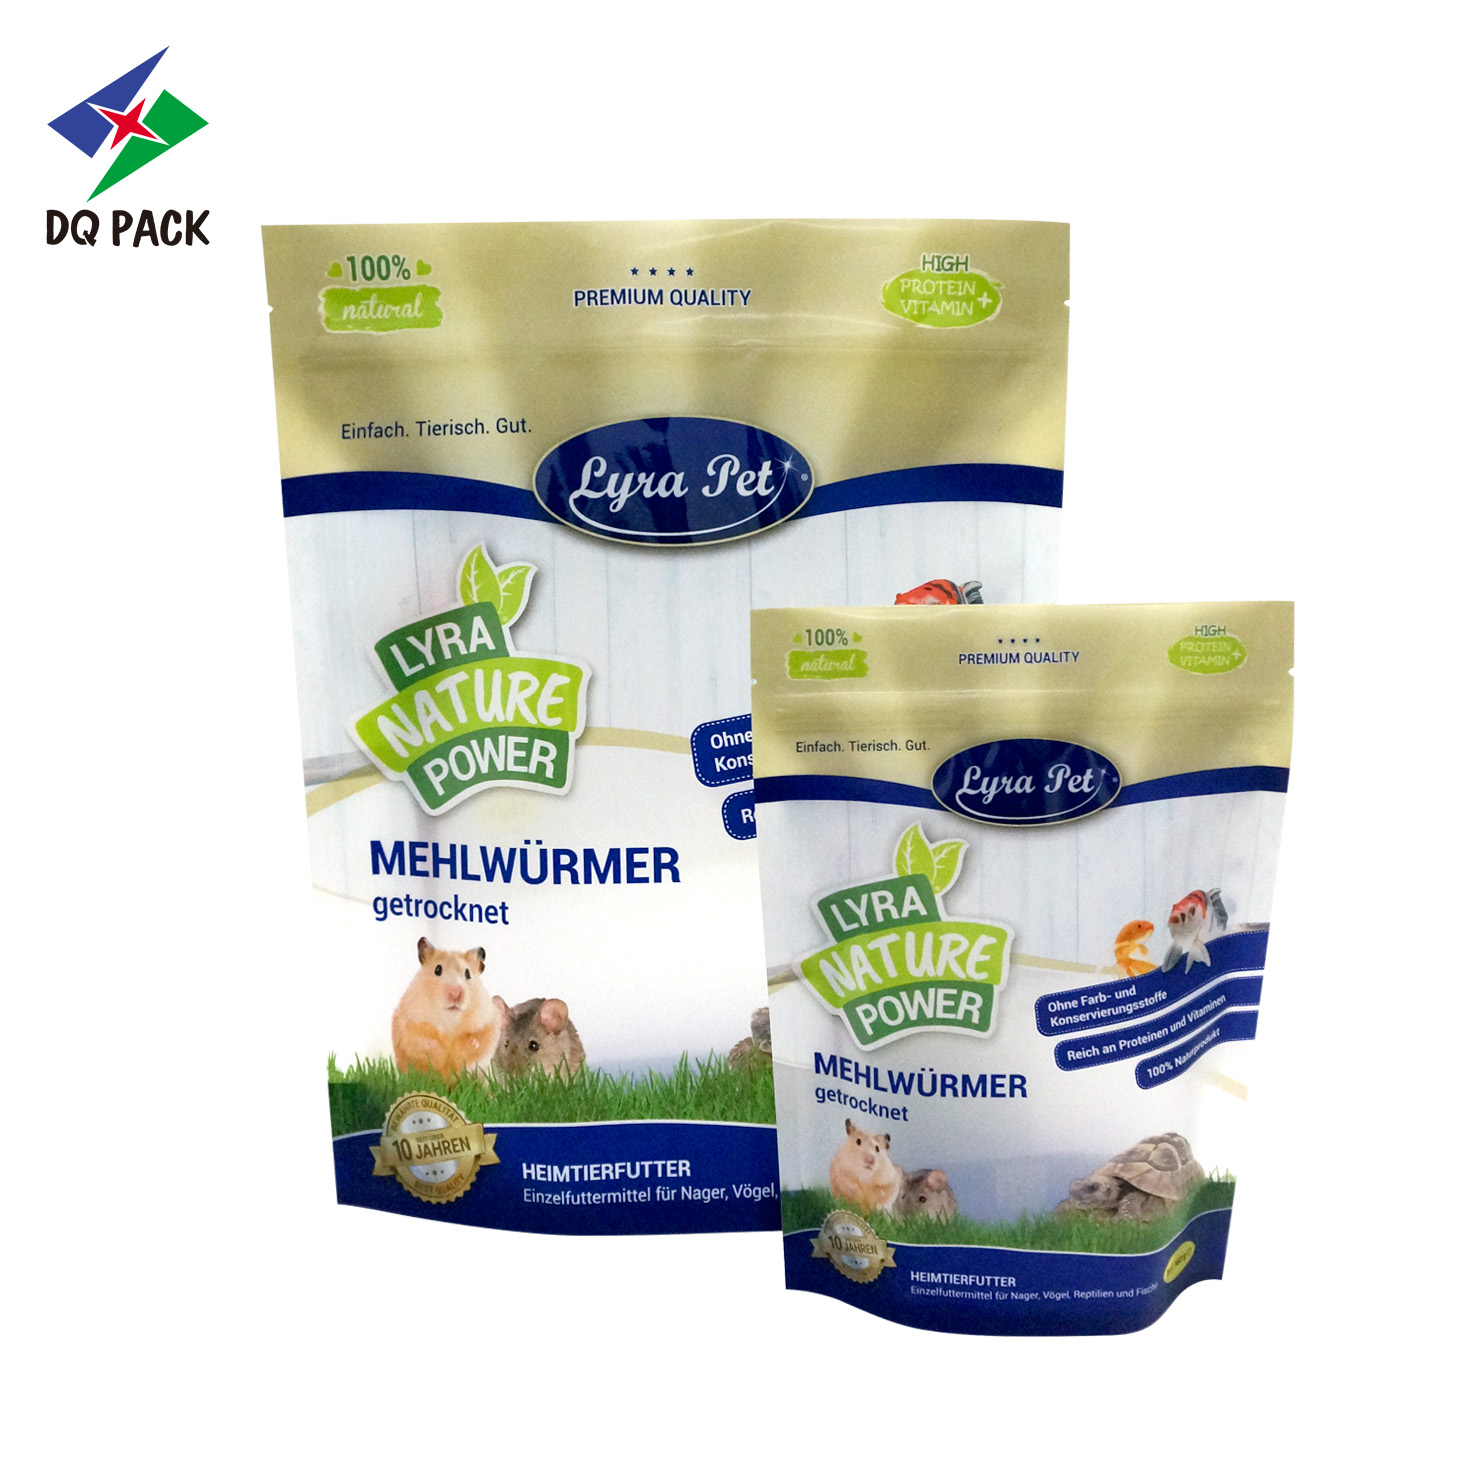 DQ PACK High Barrier PET/PE 1KG Plastic Zipper Bag Pet Food Poly Packaging Bag With Window